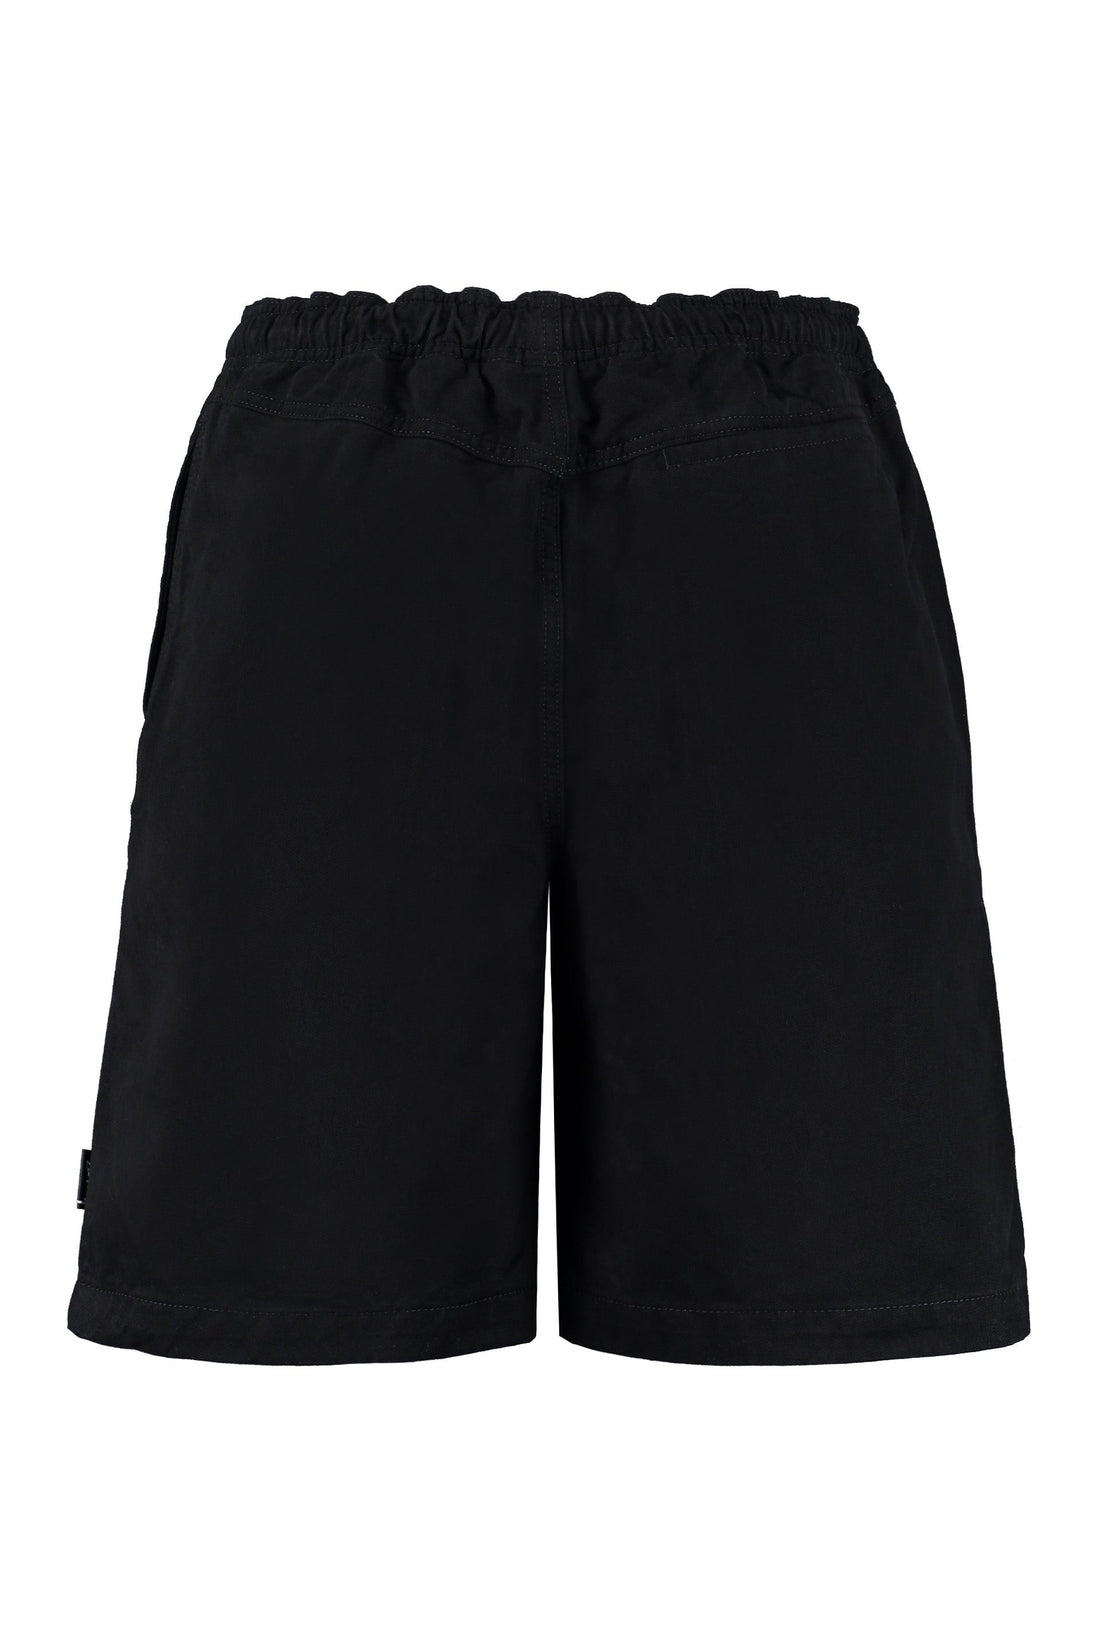 Stüssy-OUTLET-SALE-Brushed Beach cotton shorts-ARCHIVIST